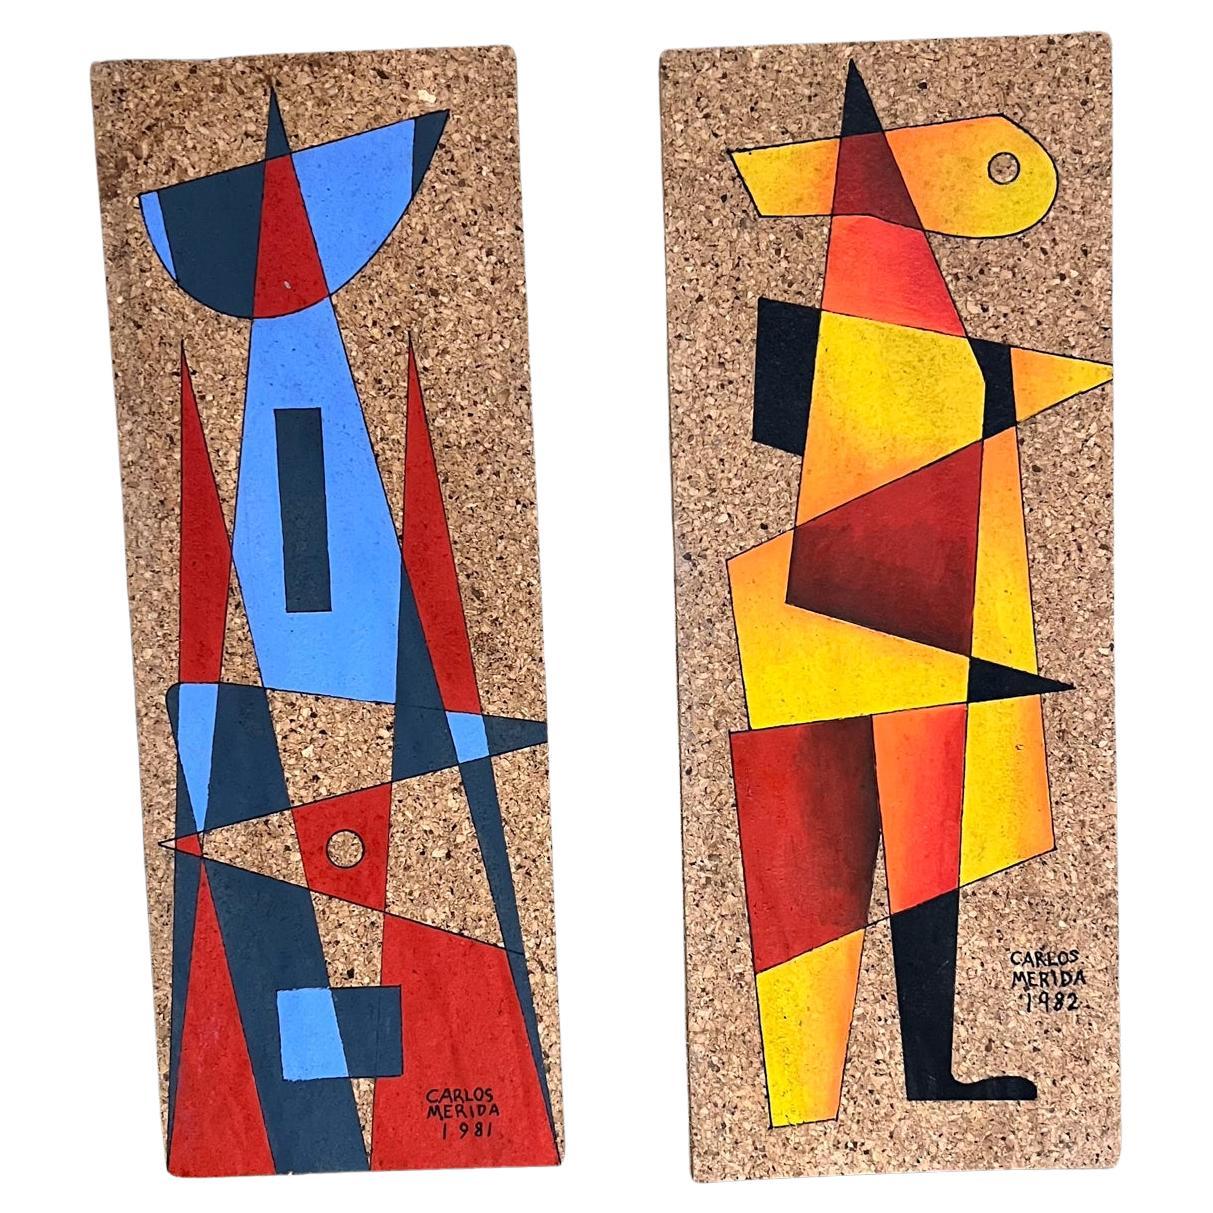 1982 Carlos Mérida Cubist Art Panels Ink on Cork Mixed Media For Sale